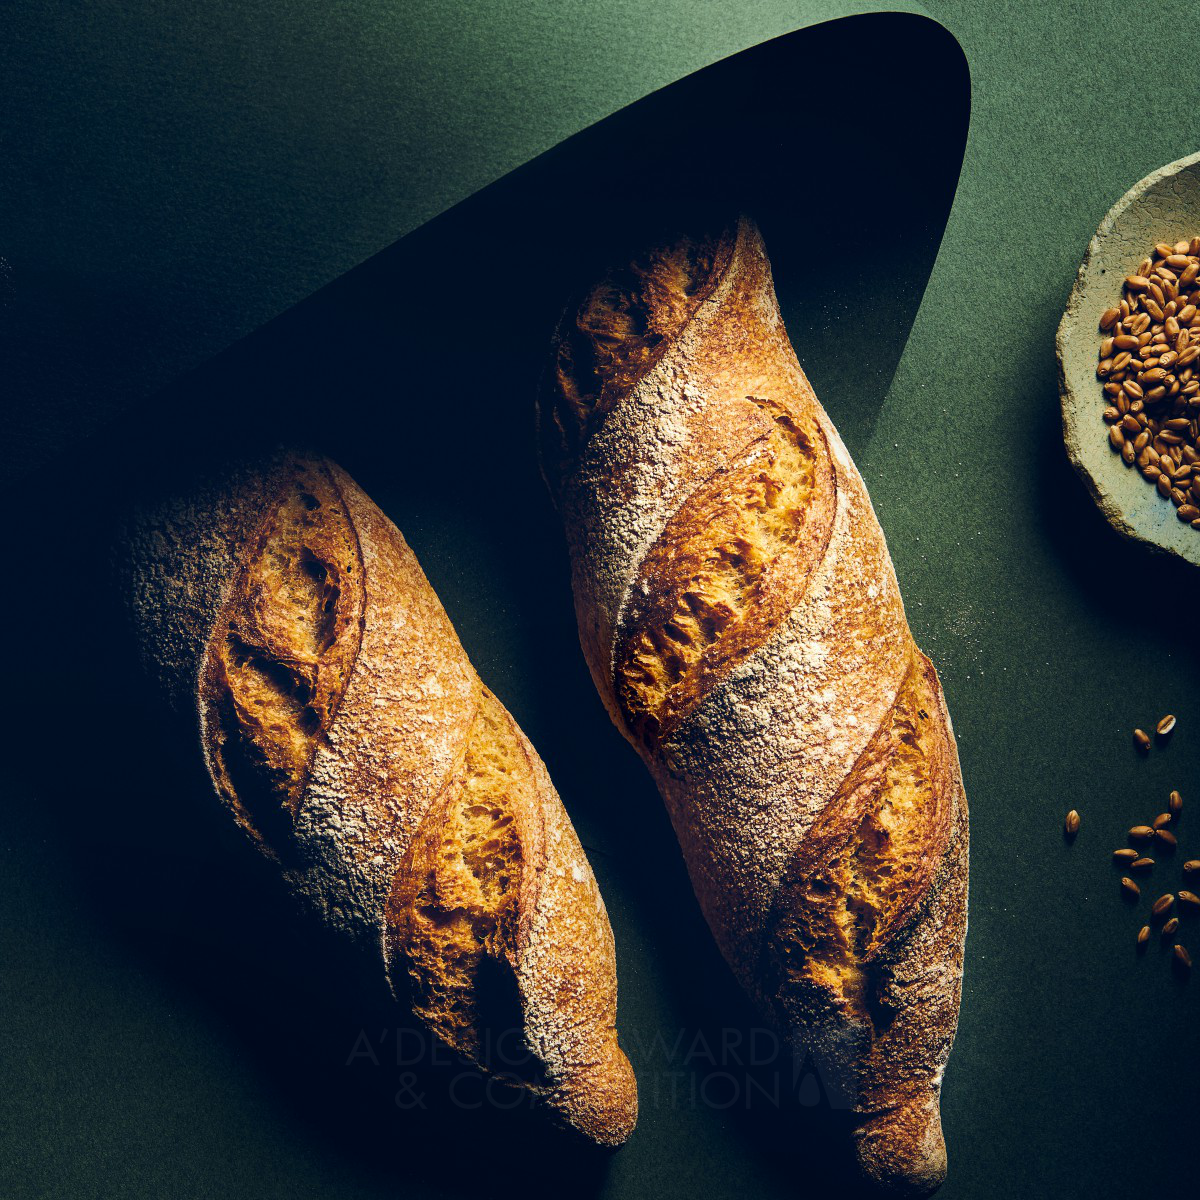 Bread Art Magazine Article by Theodosis Georgiadis